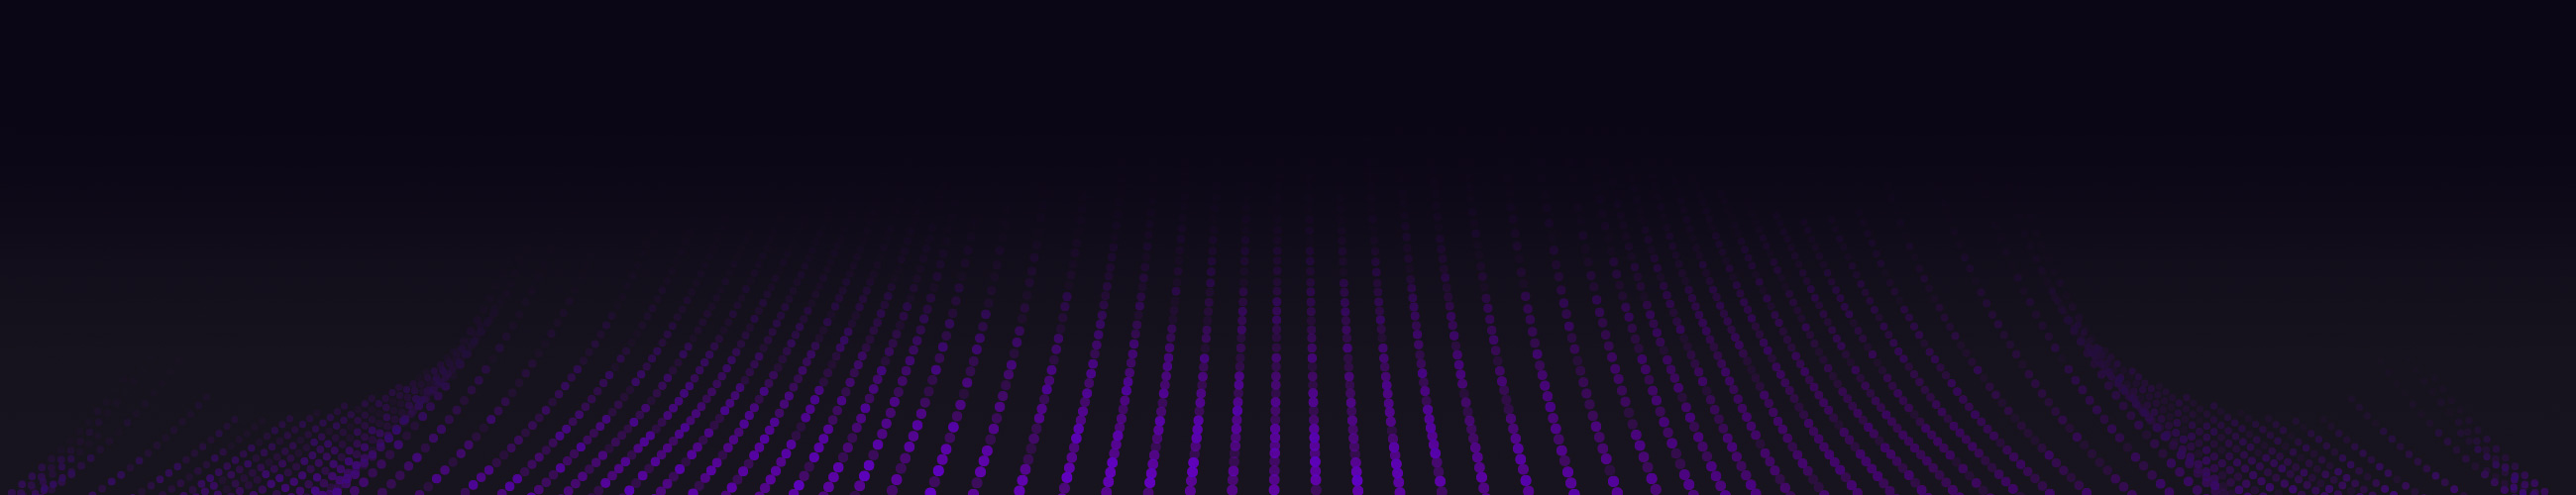 Dark Background with purple wave lines